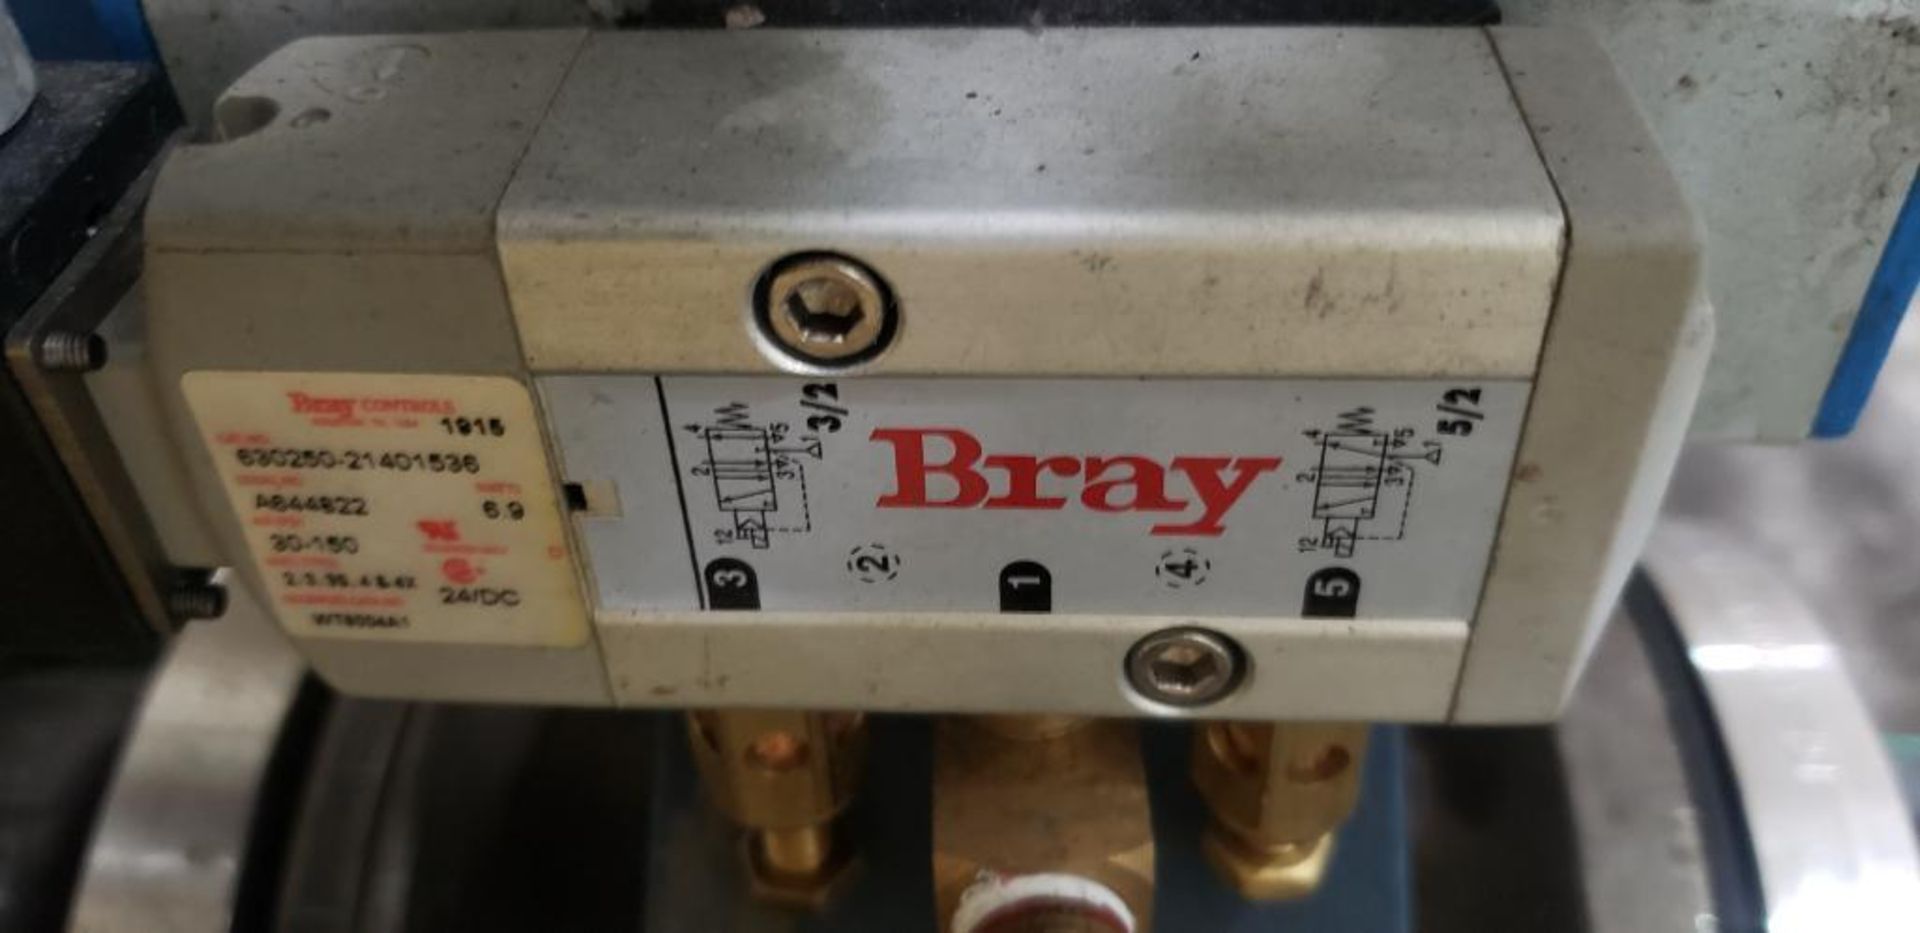 Bray Cat.# 630250-21-401536 Valve Control & Jamesbury VPVL200 DA B Valve Actuator Attachment - Image 3 of 3